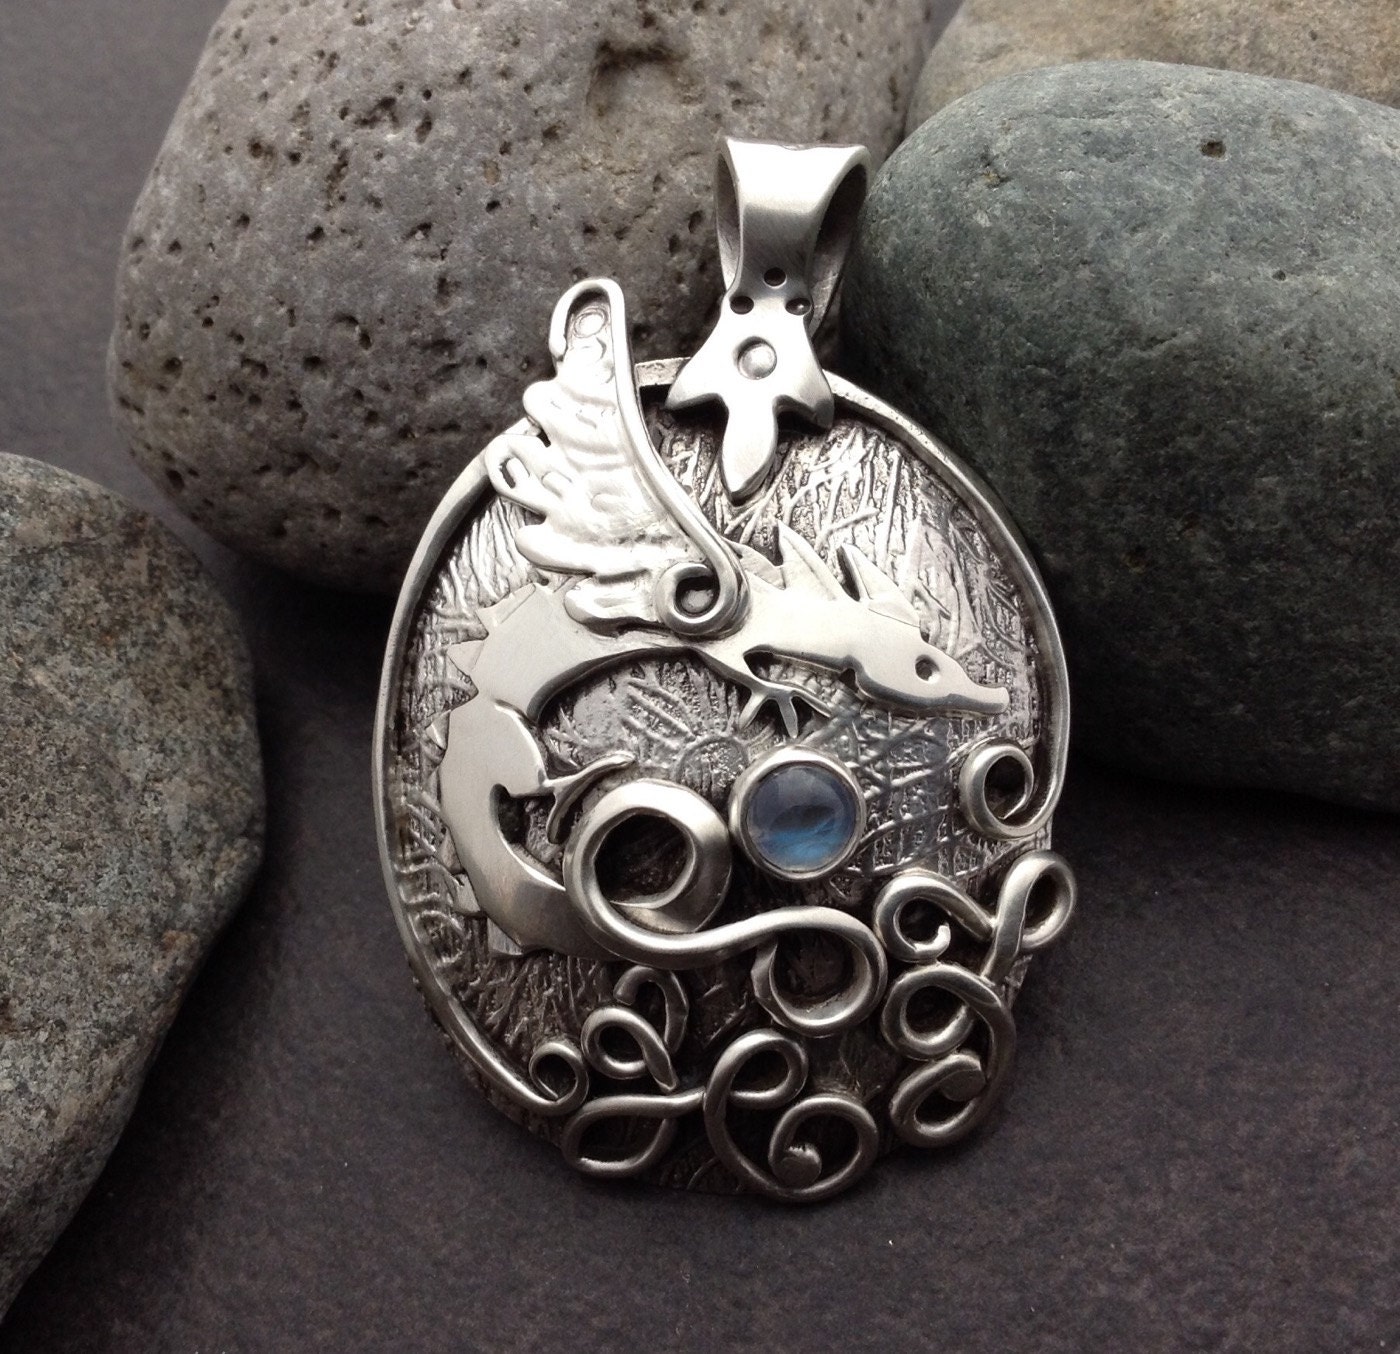 Blue moonstone & dragon pendant medium sized solid sterling